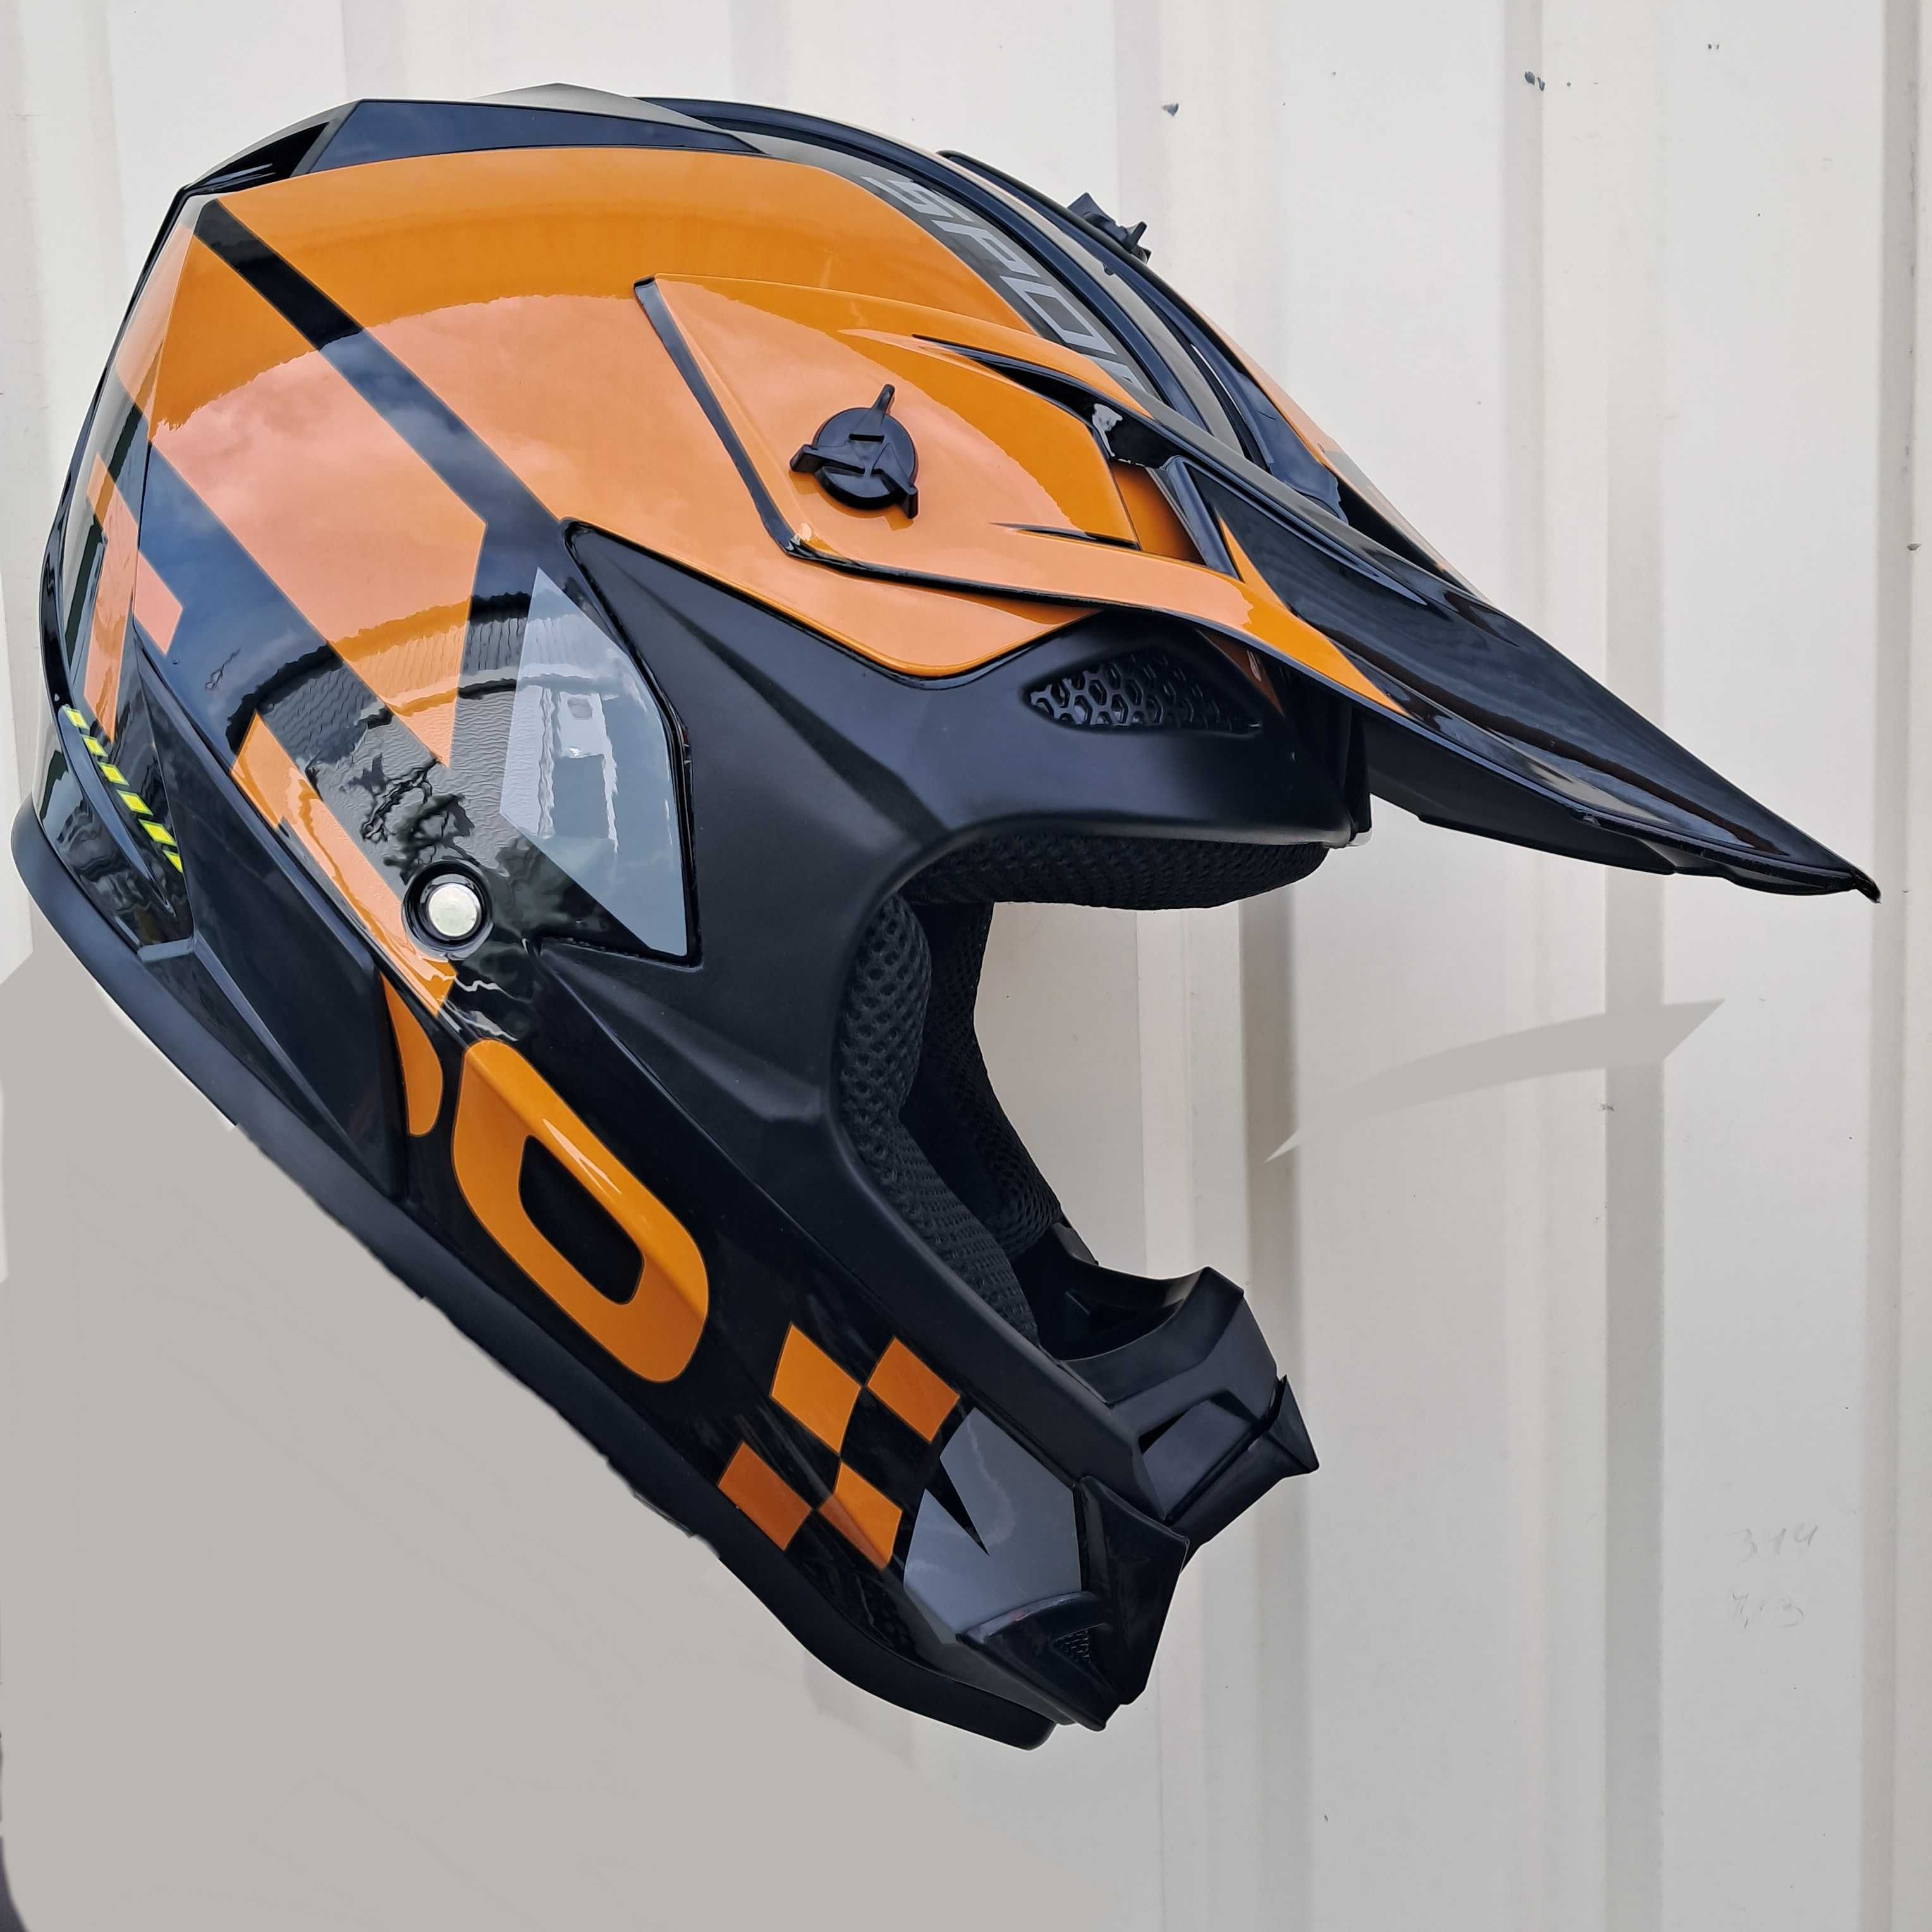 Мото шлем EDX Orang protection с очками и перчатками